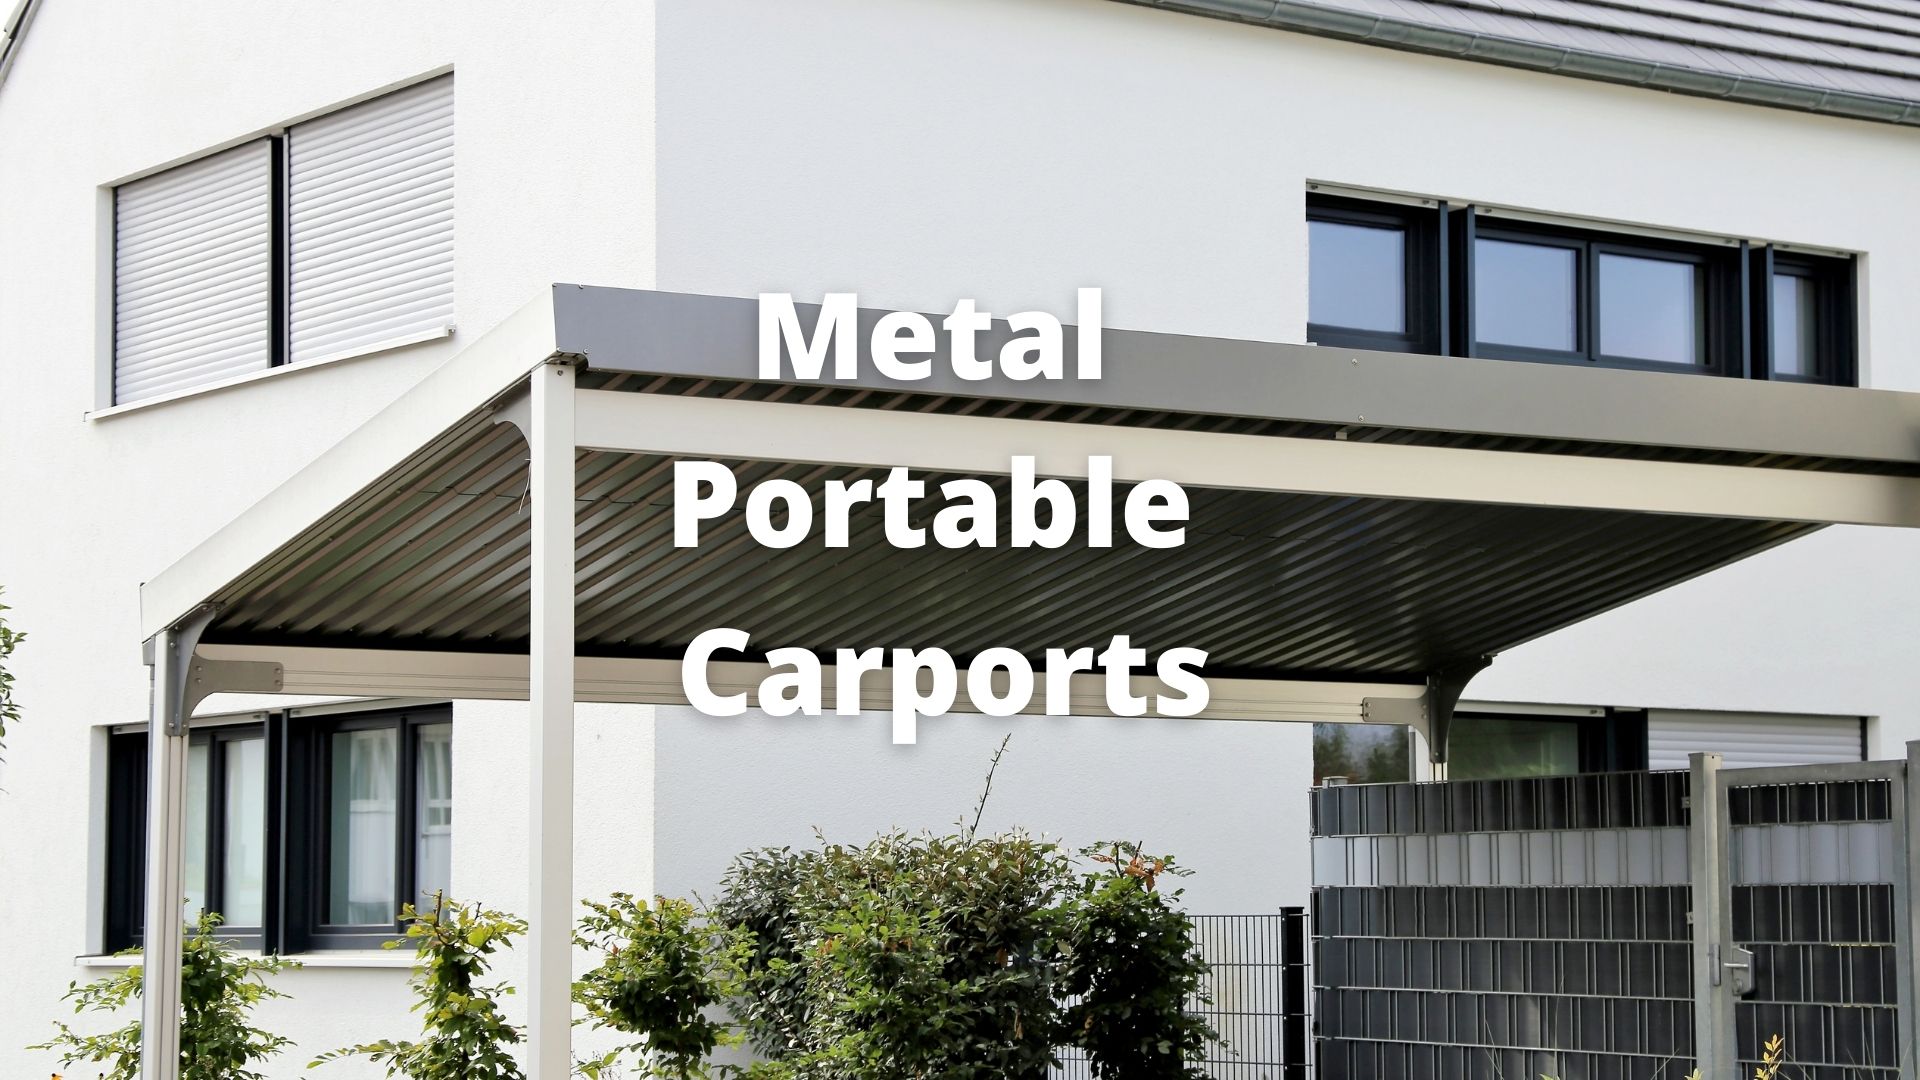 Metal Portable Carports